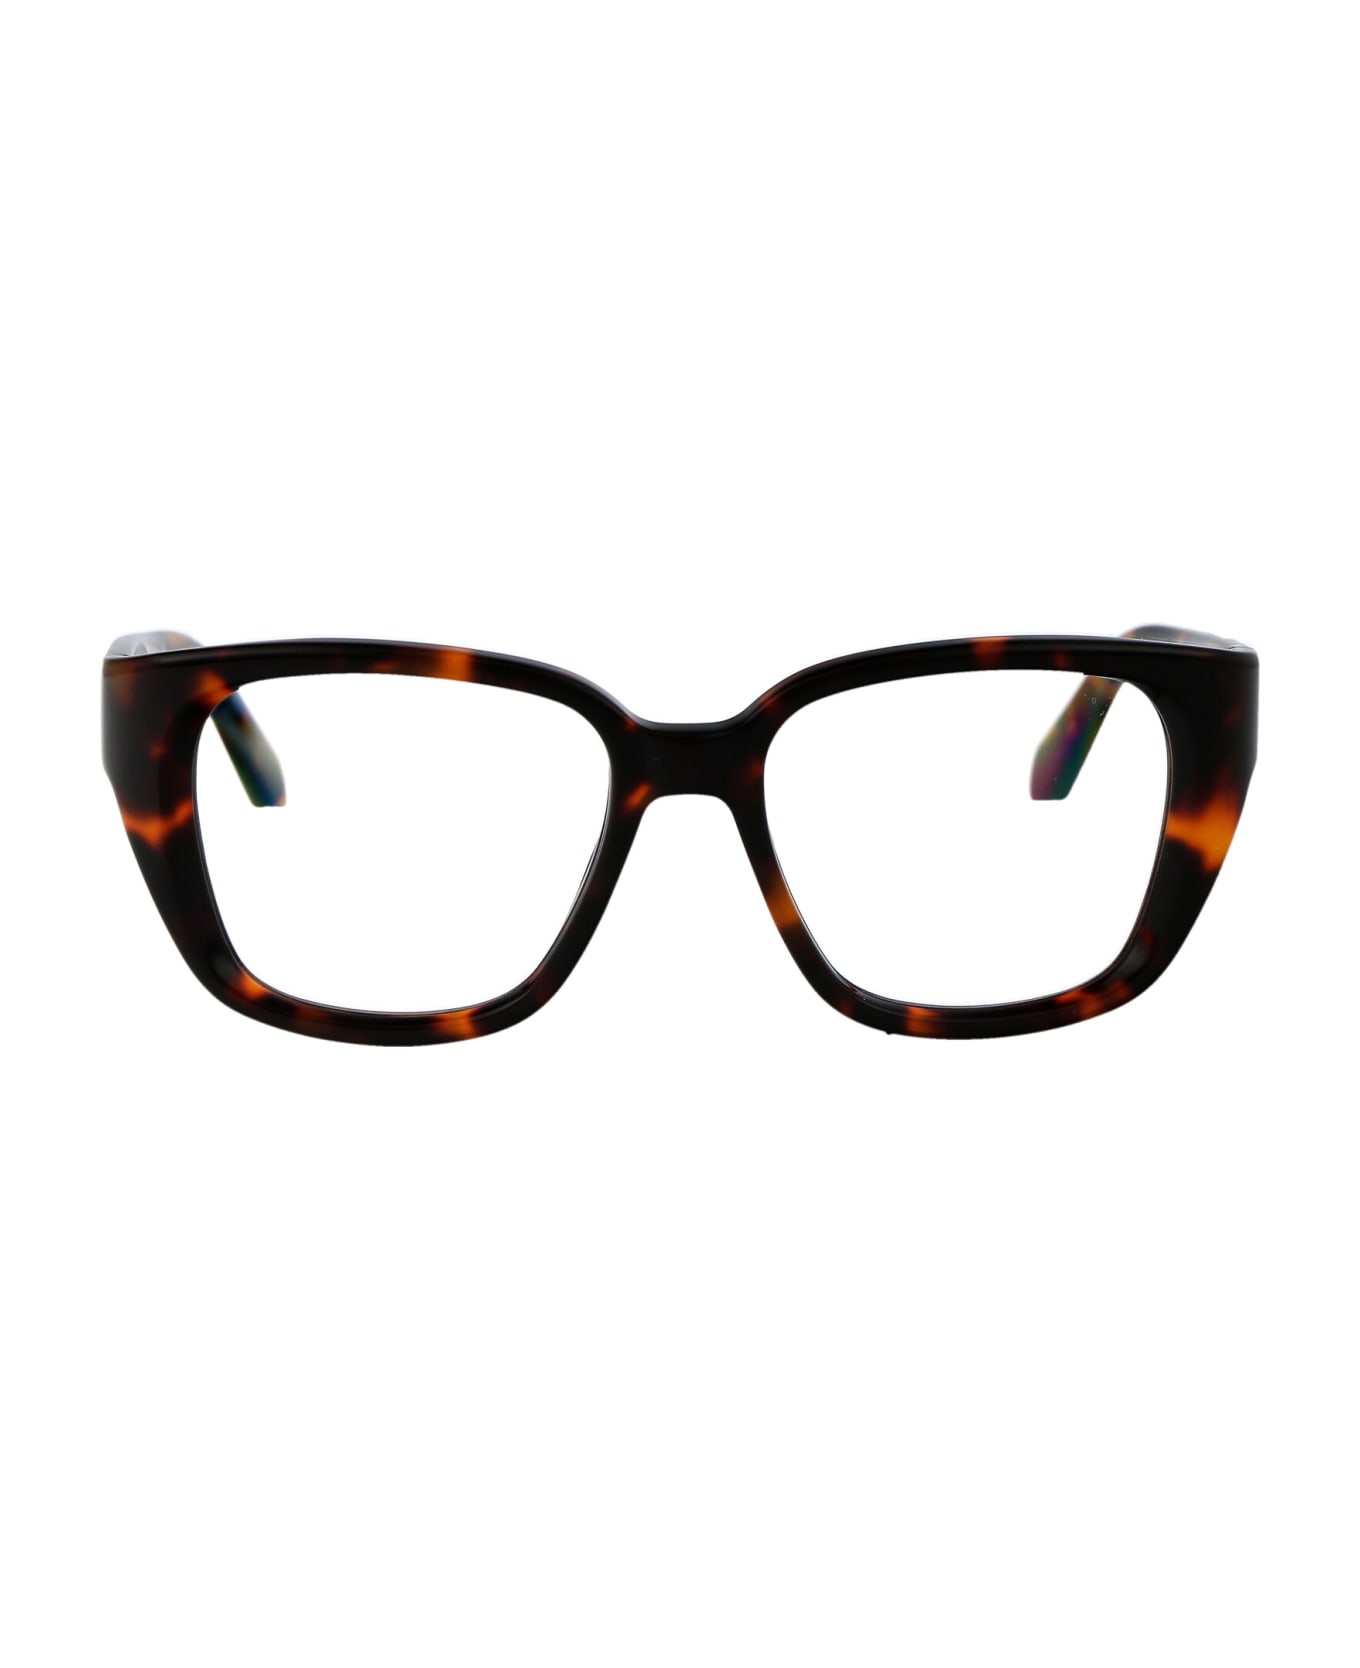 Off-White Optical Style 63 Glasses - 6000 HAVANA アイウェア